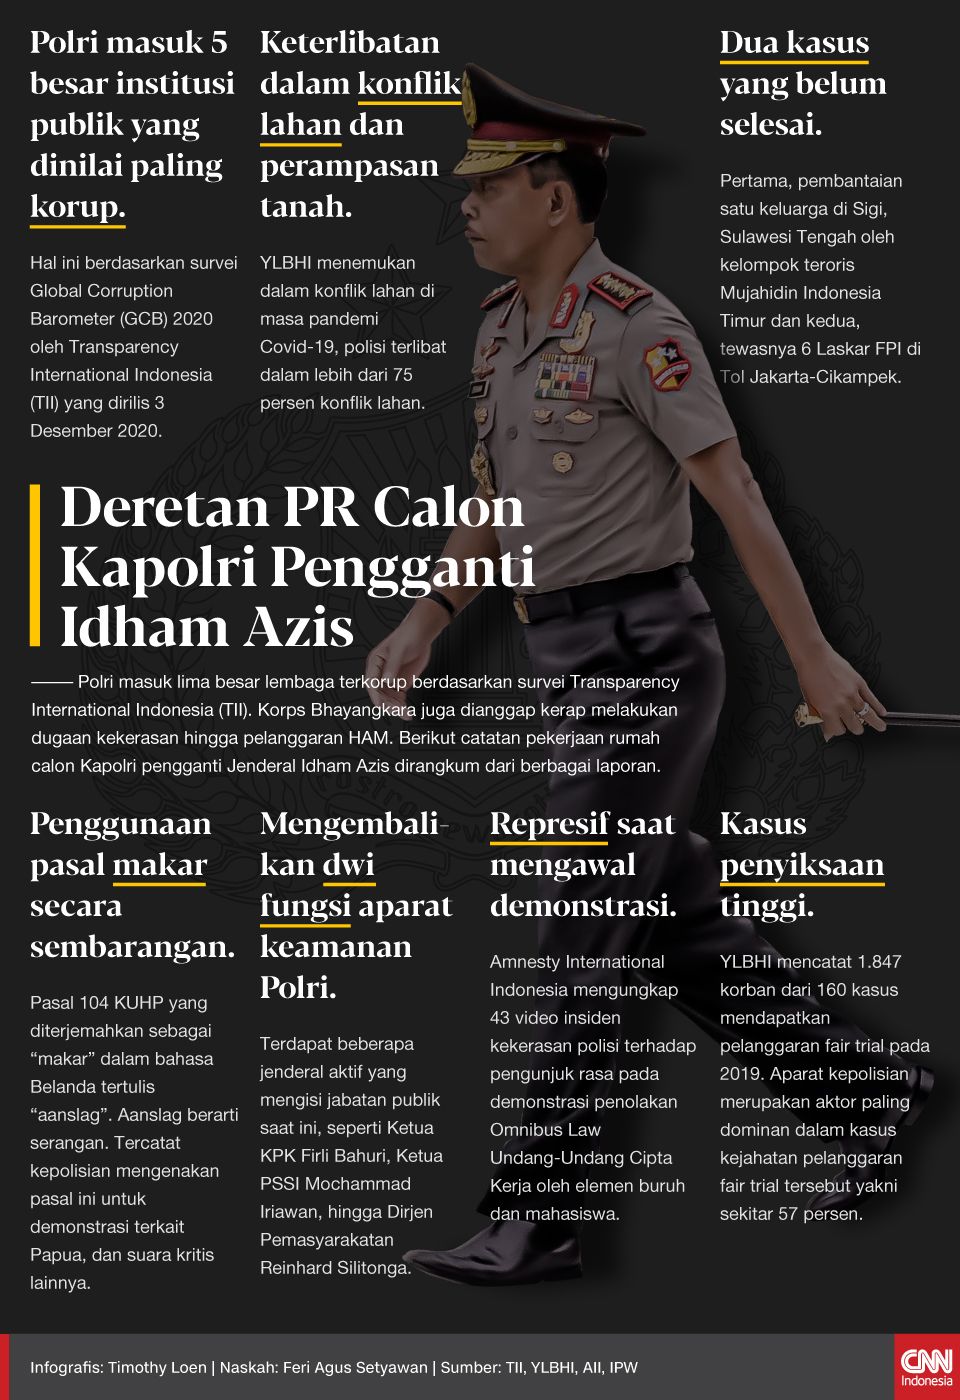 Infografis Deretan PR Calon Kapolri Pengganti Idham Azis